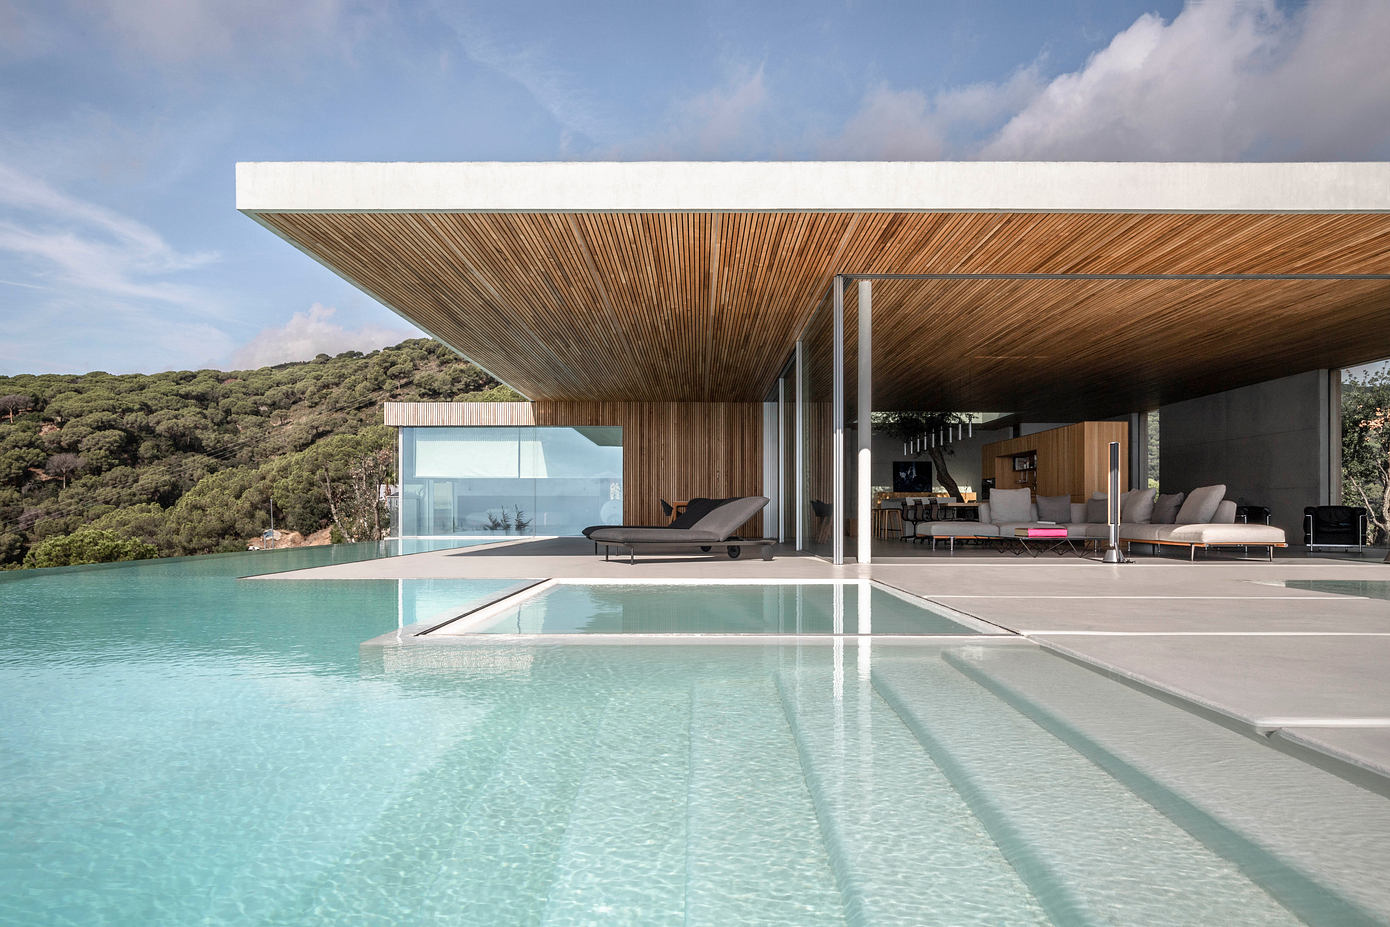 Barcelona House: Innovative Design Meets Natural Beauty